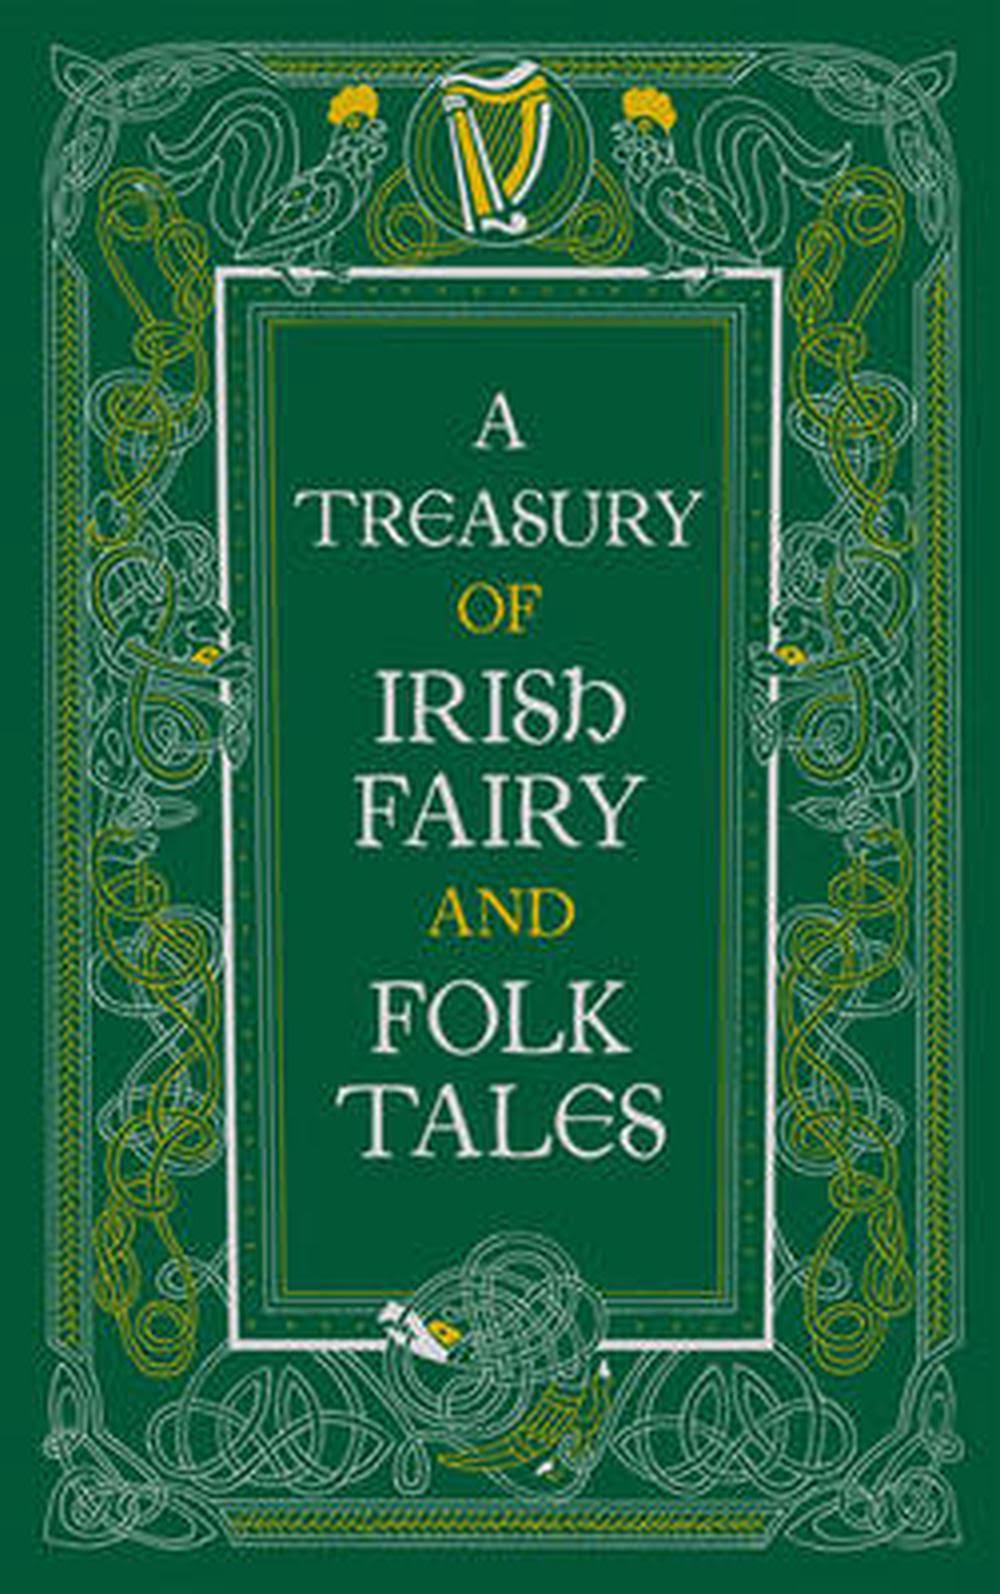 A Treasury of Irish Fairy and Folk Tales - Barnes & Noble Inc